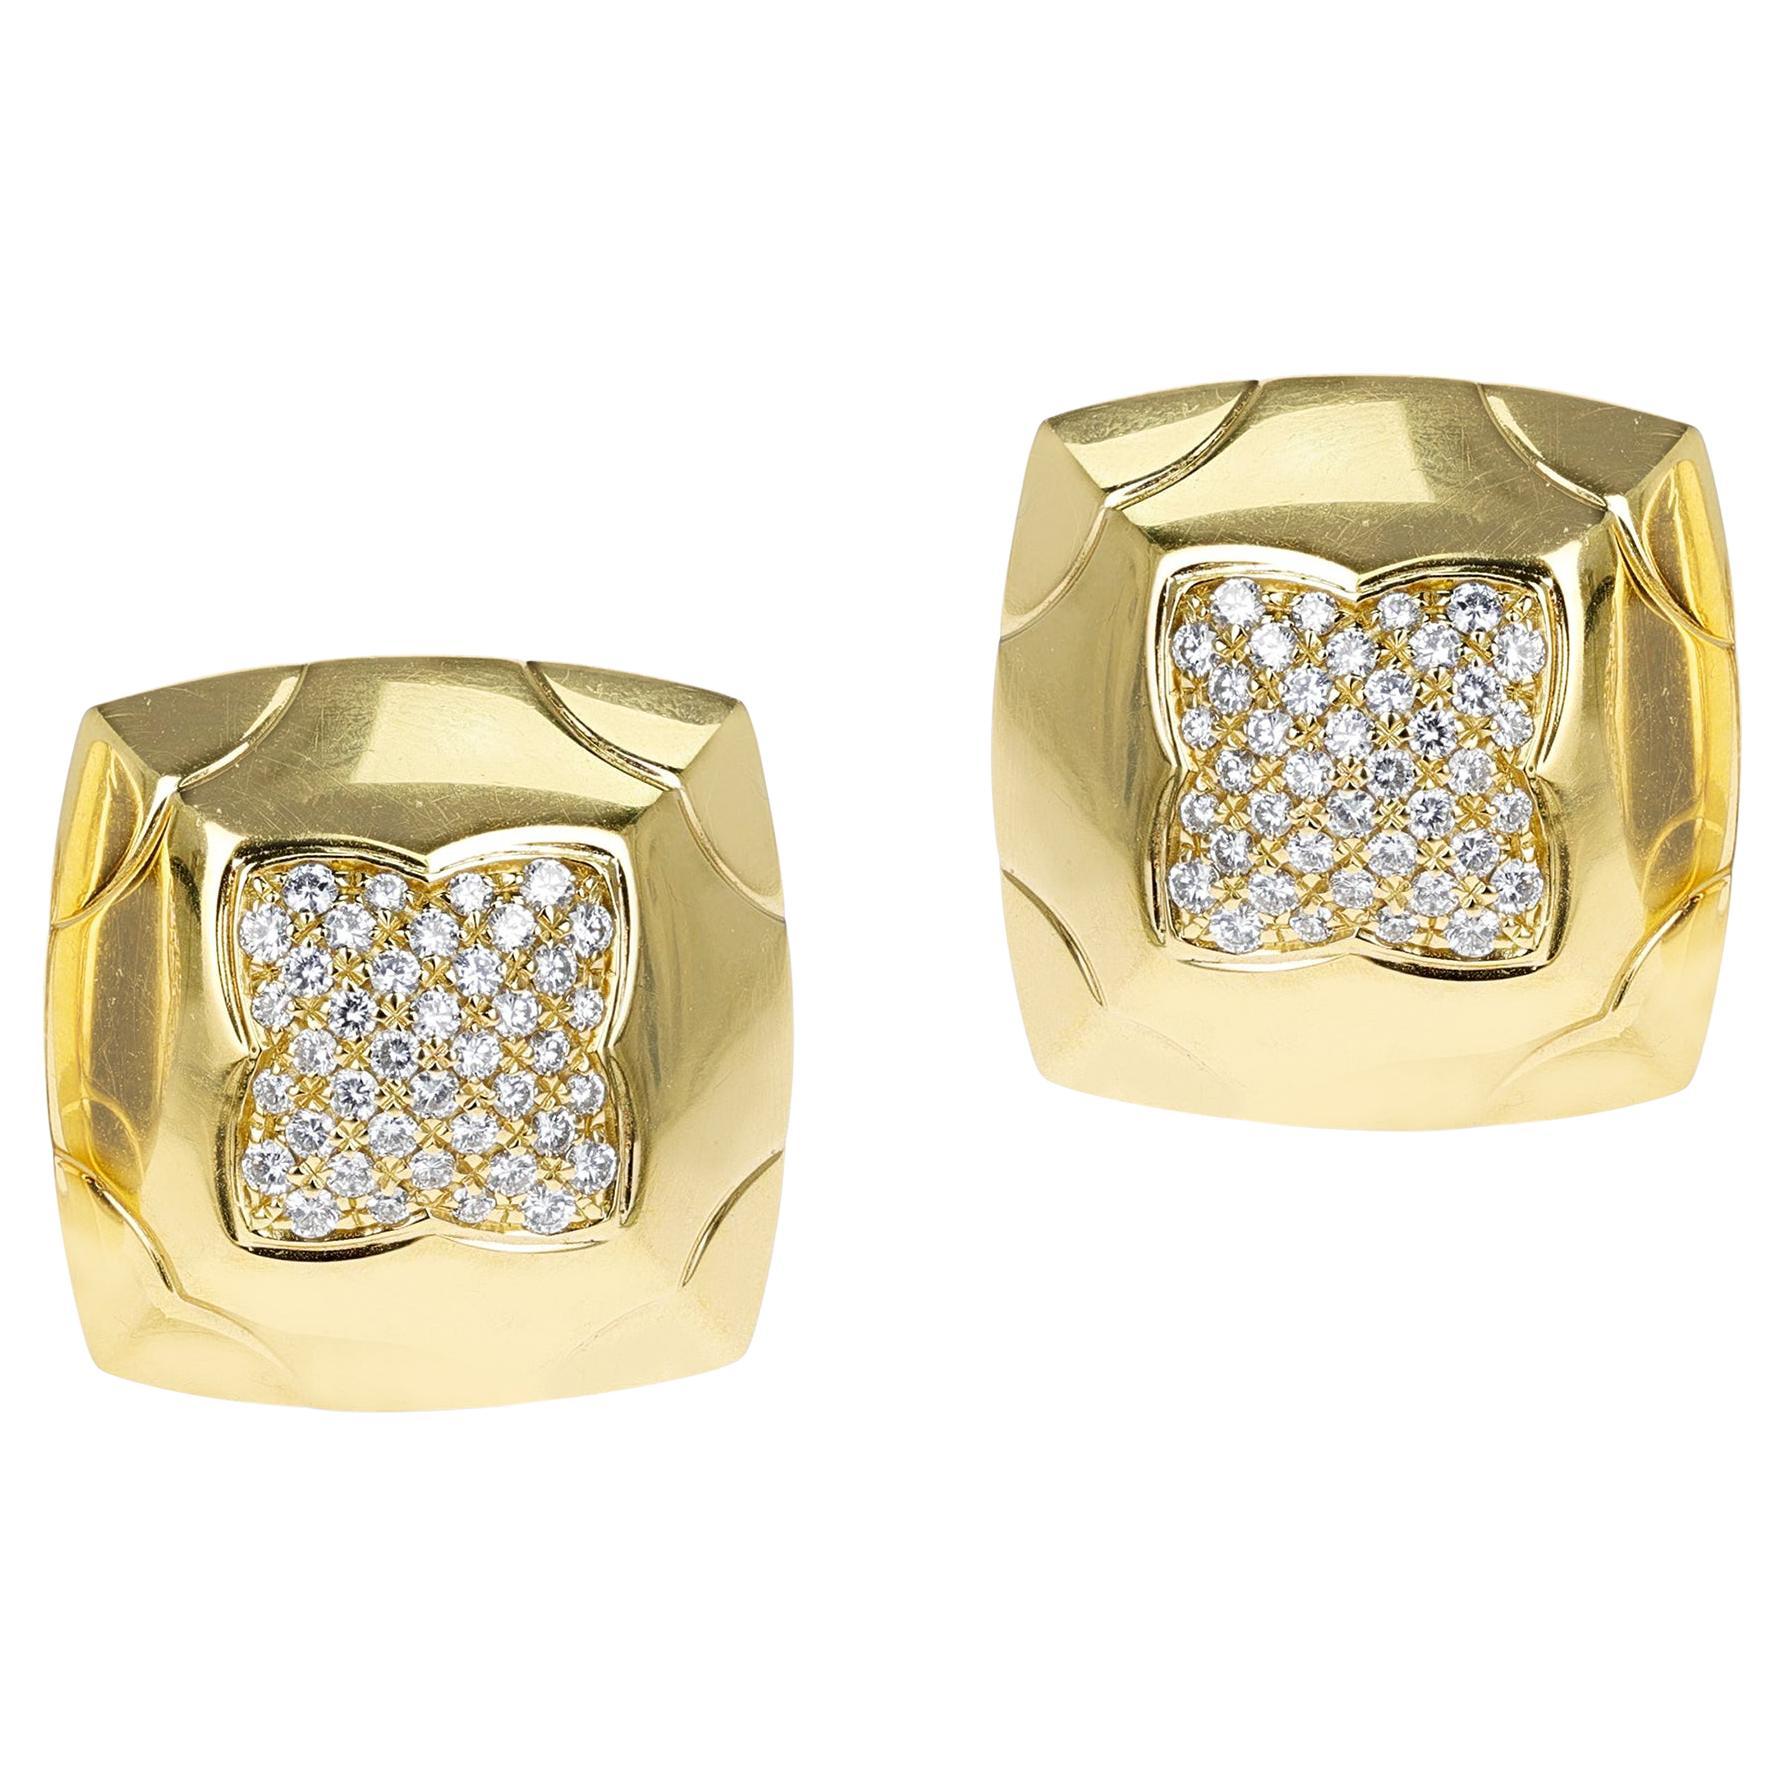 Bvlgari Square Earrings with Diamonds, 18k Yellow Gold